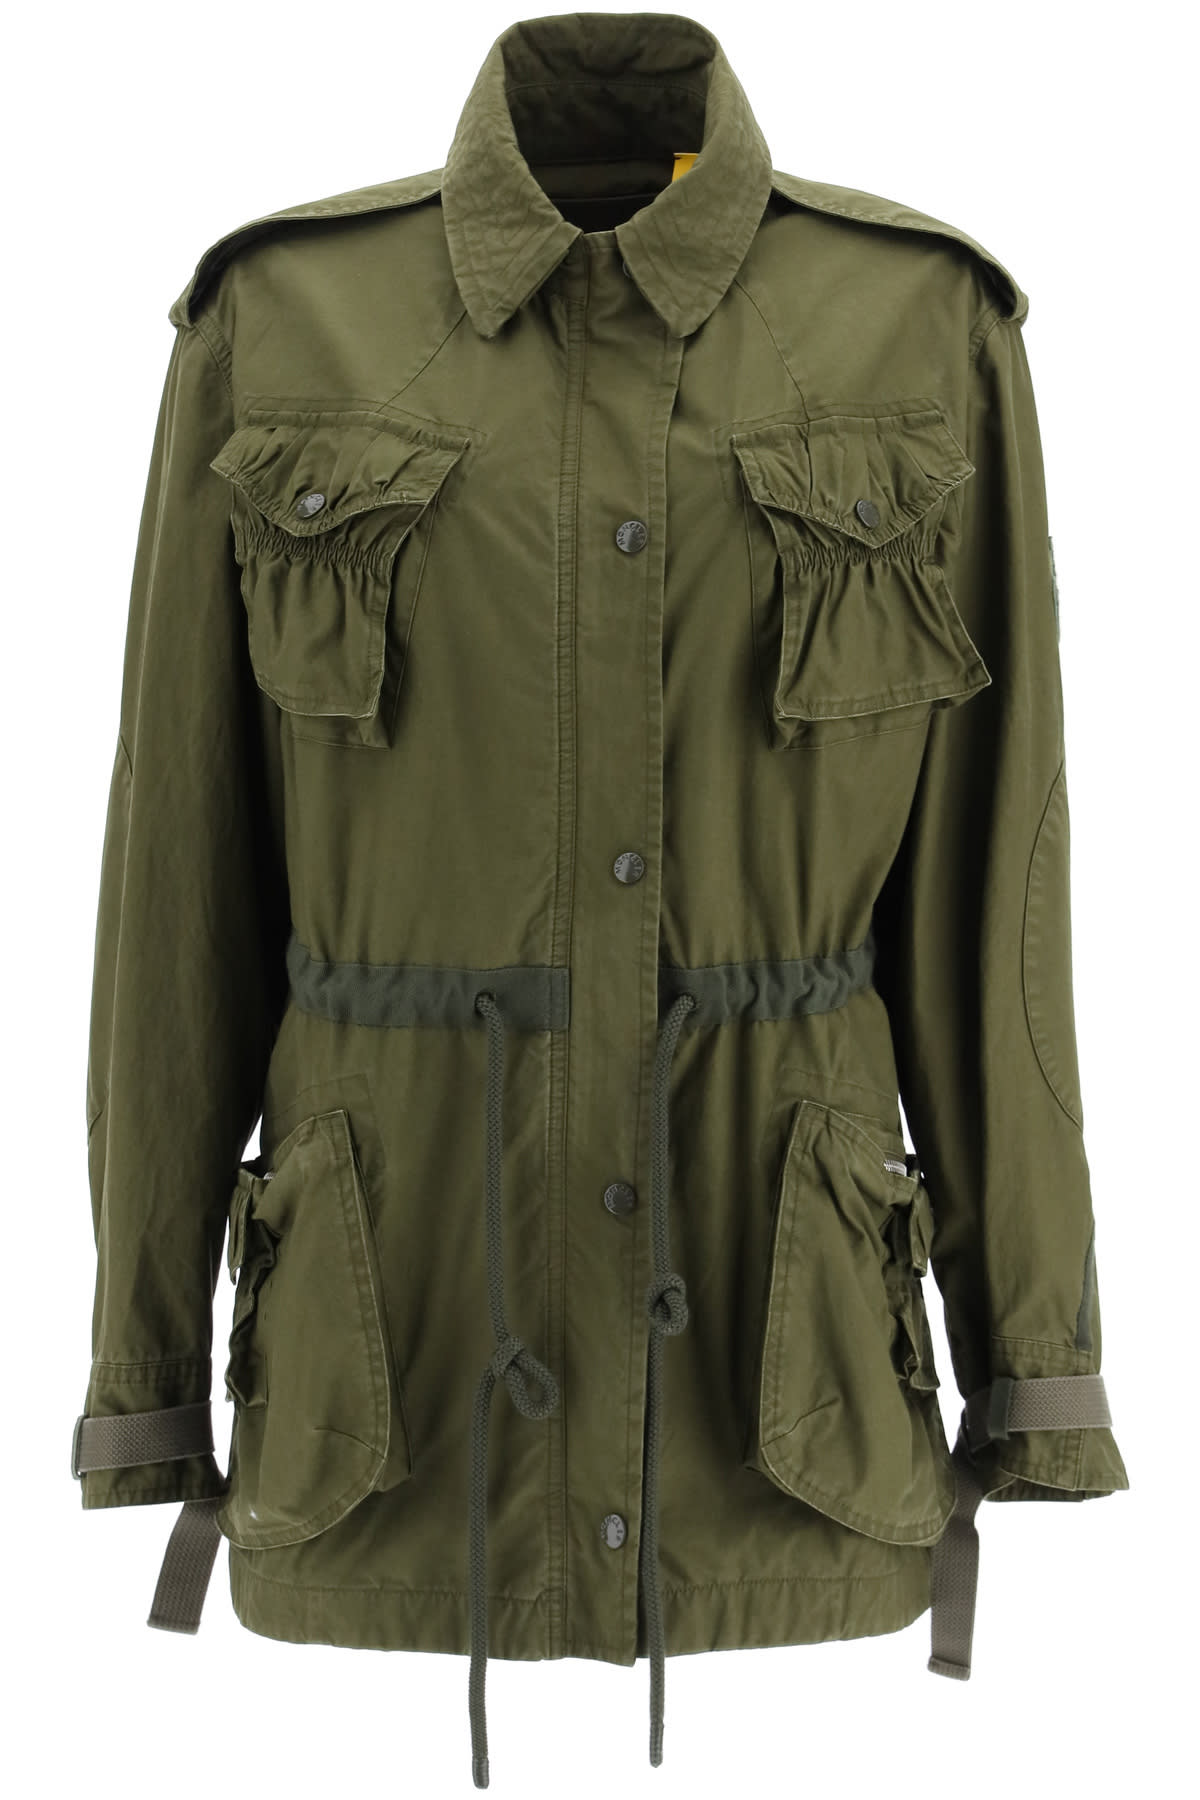 Photo of  Moncler Genius Kynance Jacket 1- shop Moncler Genius jackets online sales